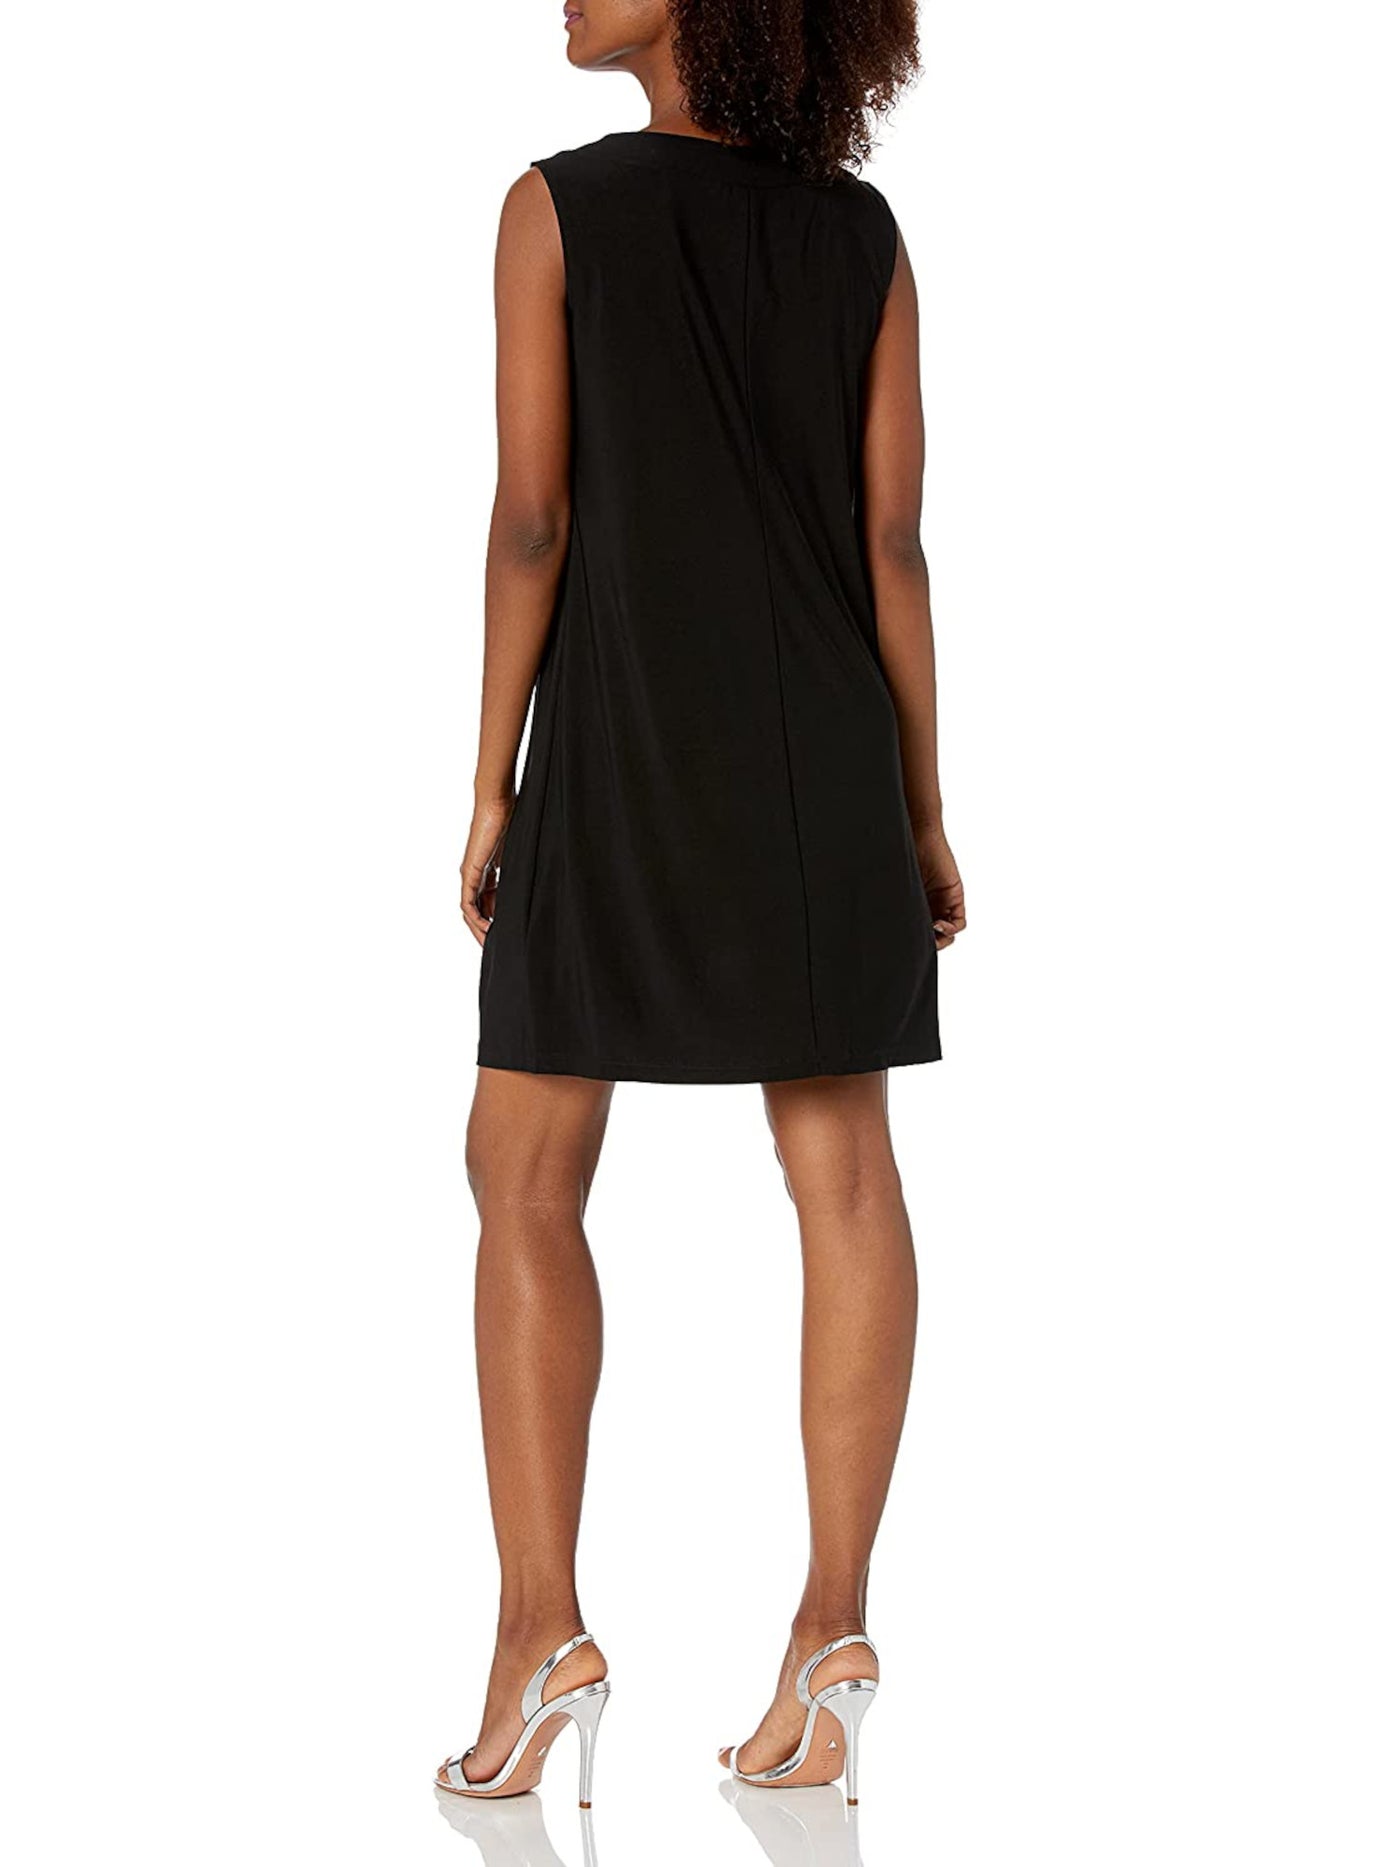 R&M RICHARDS PETITE Womens Black Embellished Open Front 3/4 Sleeve Jacket Sleeveless Scoop Neck Short Wear To Work Shift Dress Petites 4P